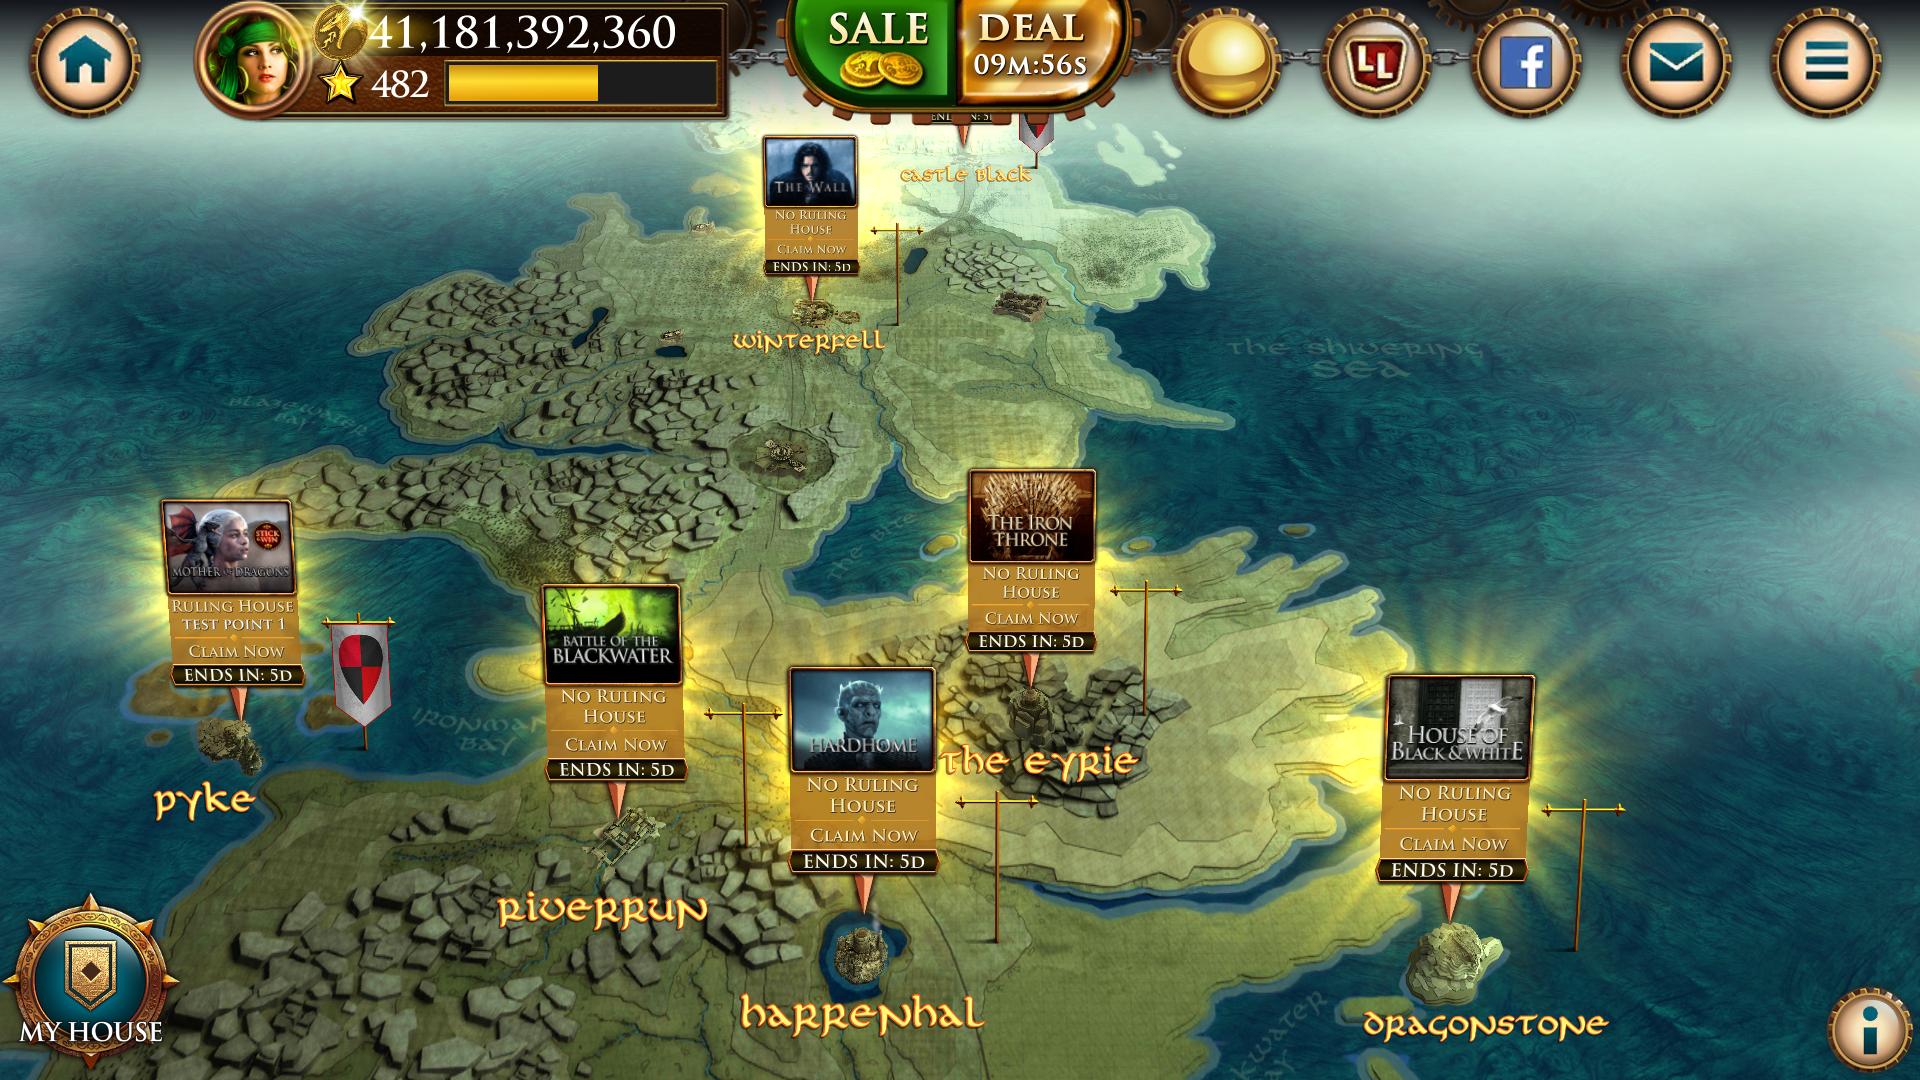 Game of Thrones Slots Casino: Epic Free Slots Game 1.1.1802 Screenshot 6